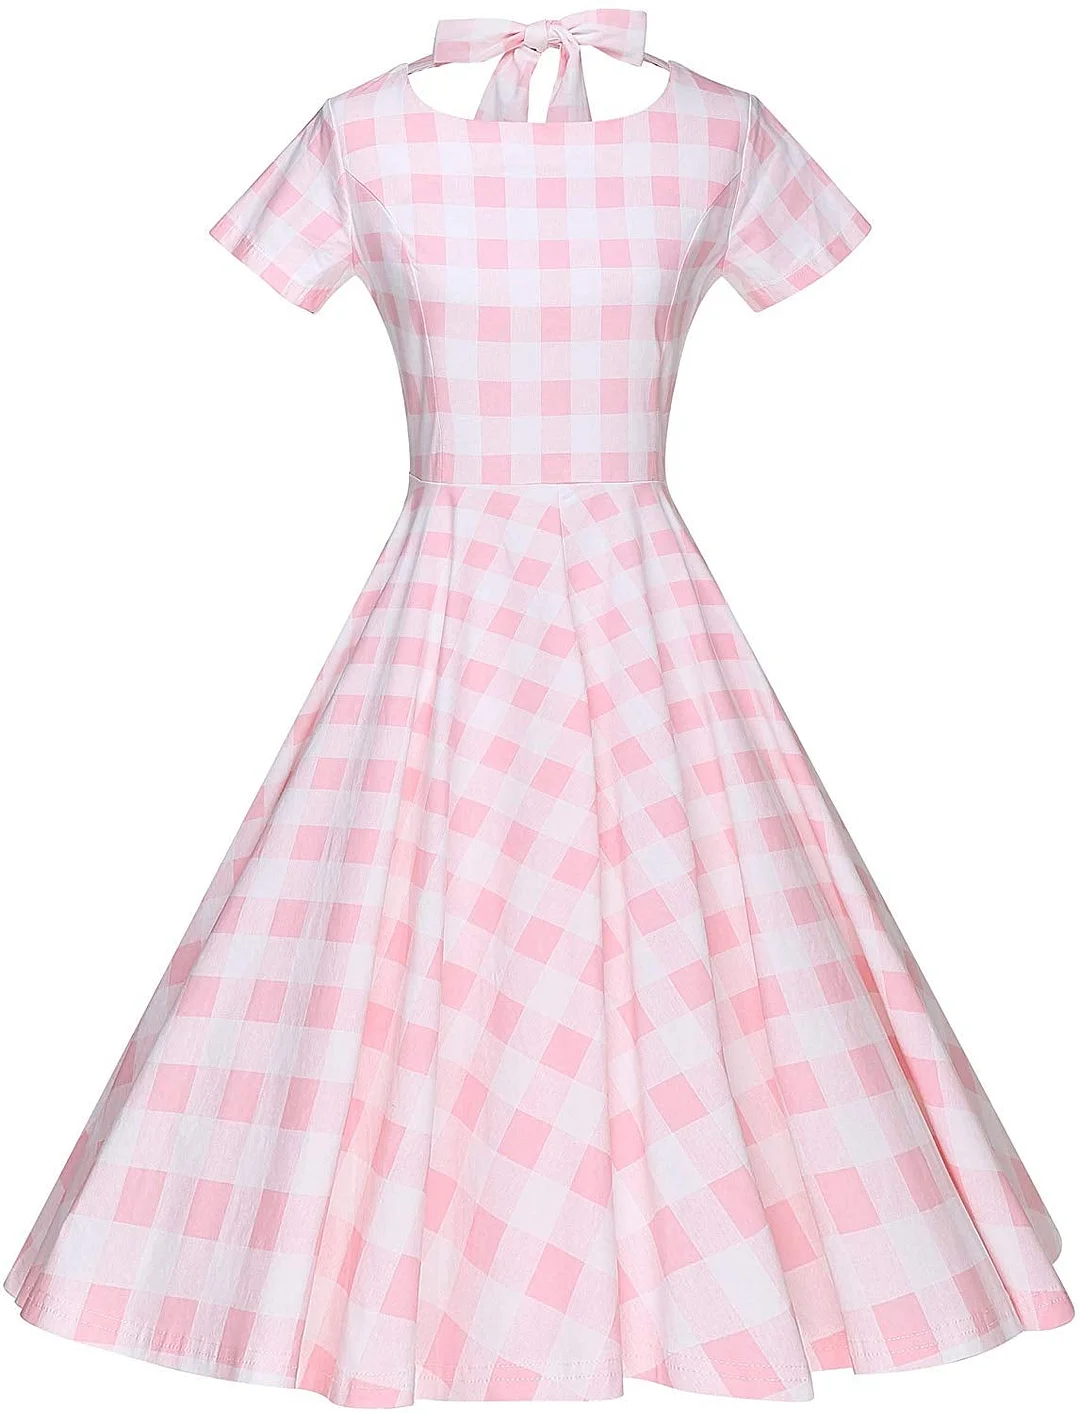 Womens 1950s Vintage Retro Party Swing Dress Rockabillty Stretchy Dress